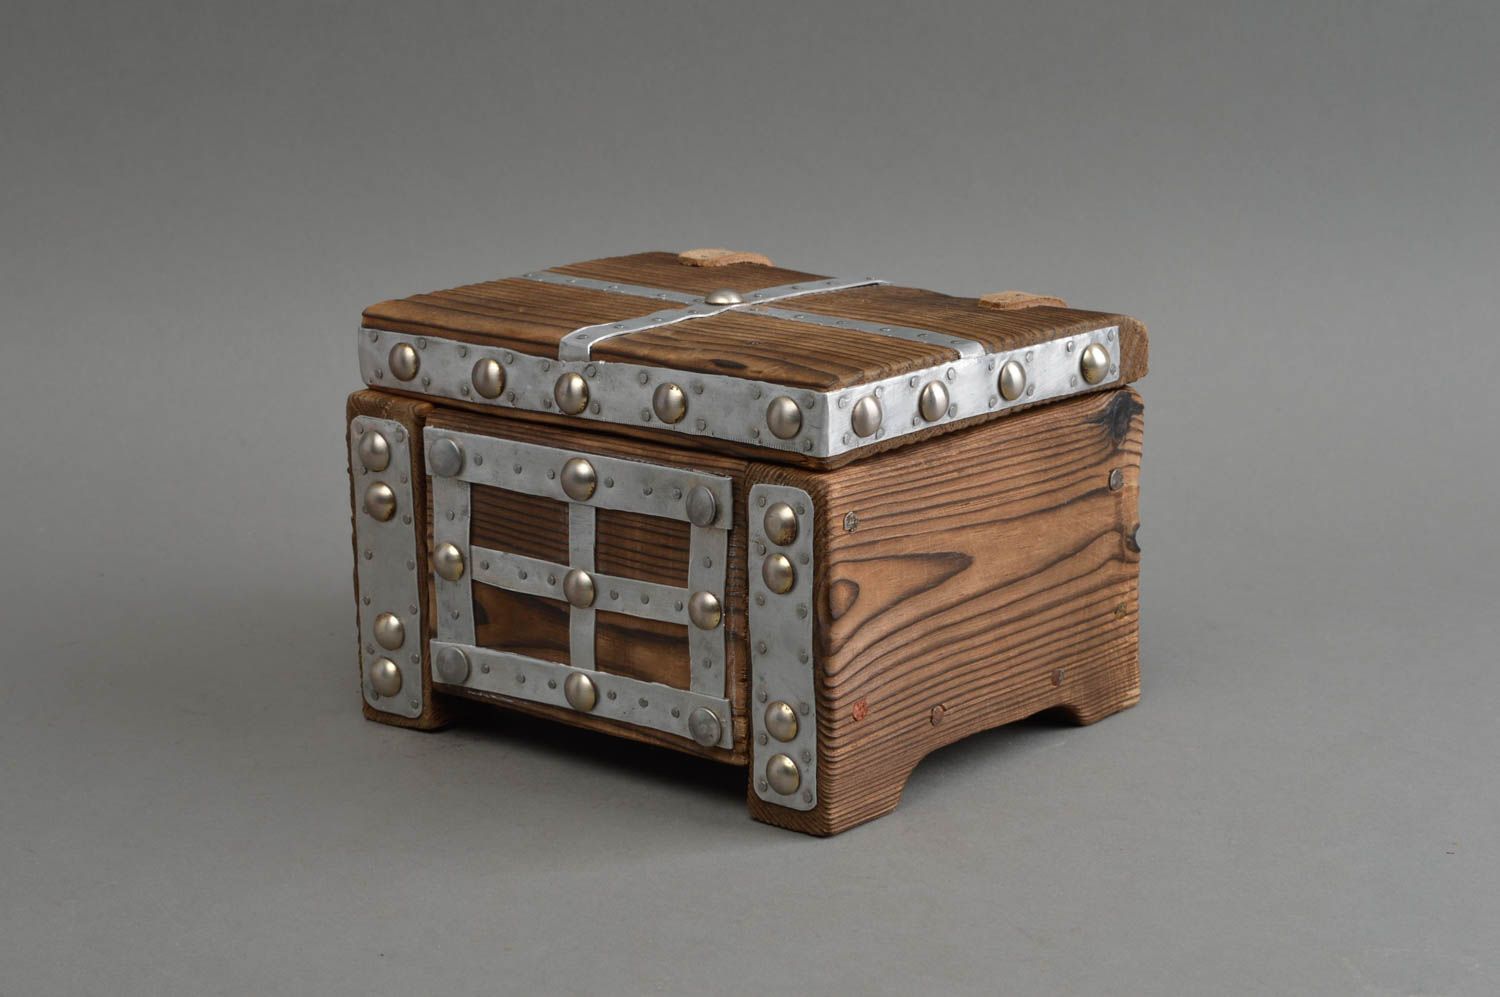 Beautiful handmade wooden jewelry box designer home decorations gifts ideas photo 4